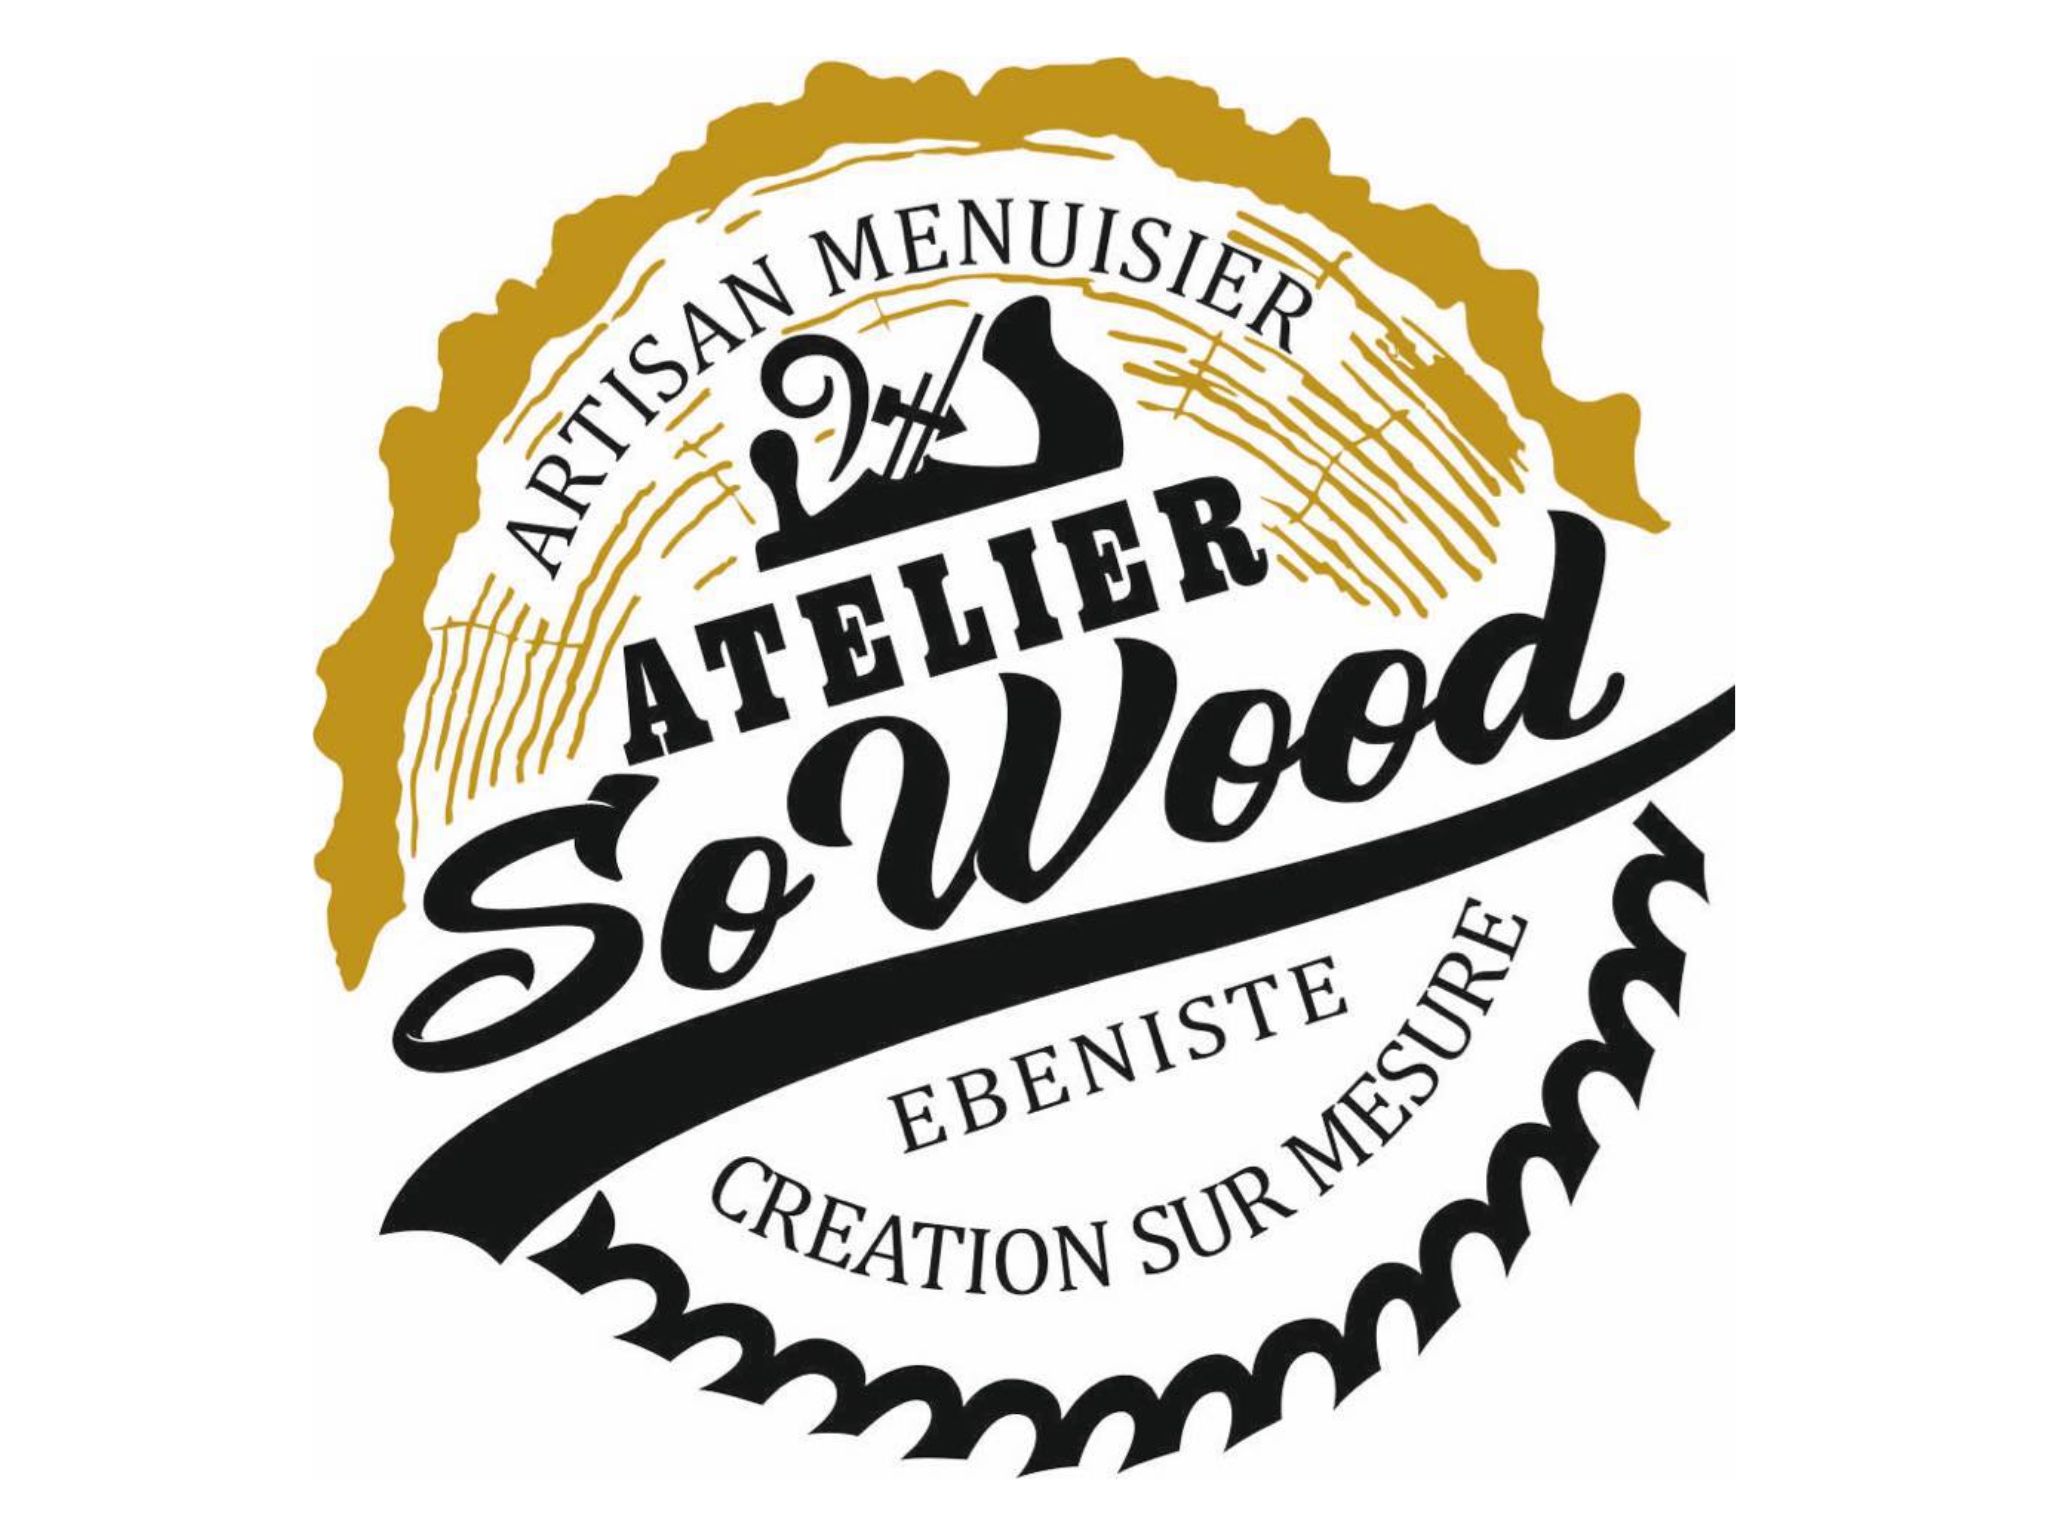  Logo Atelier Sowood